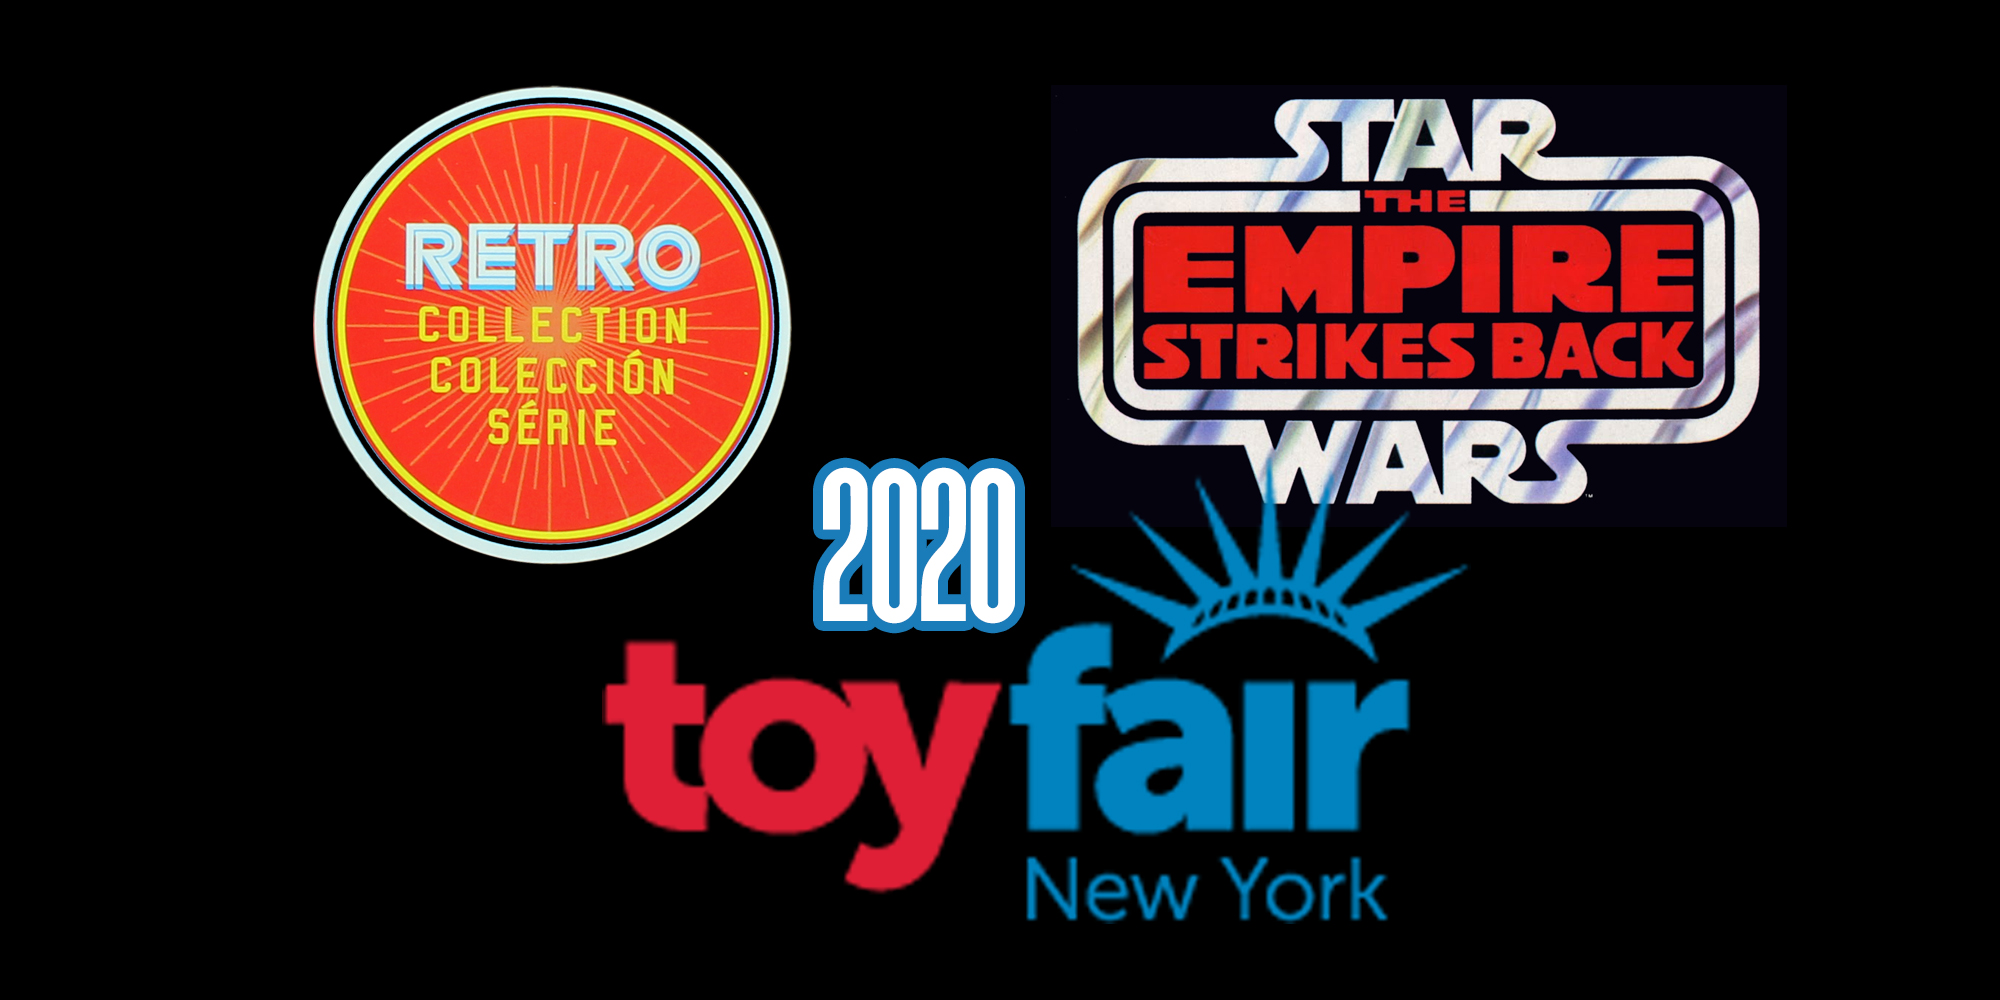 Star Wars Retro Collection New York Toy Fair 2020